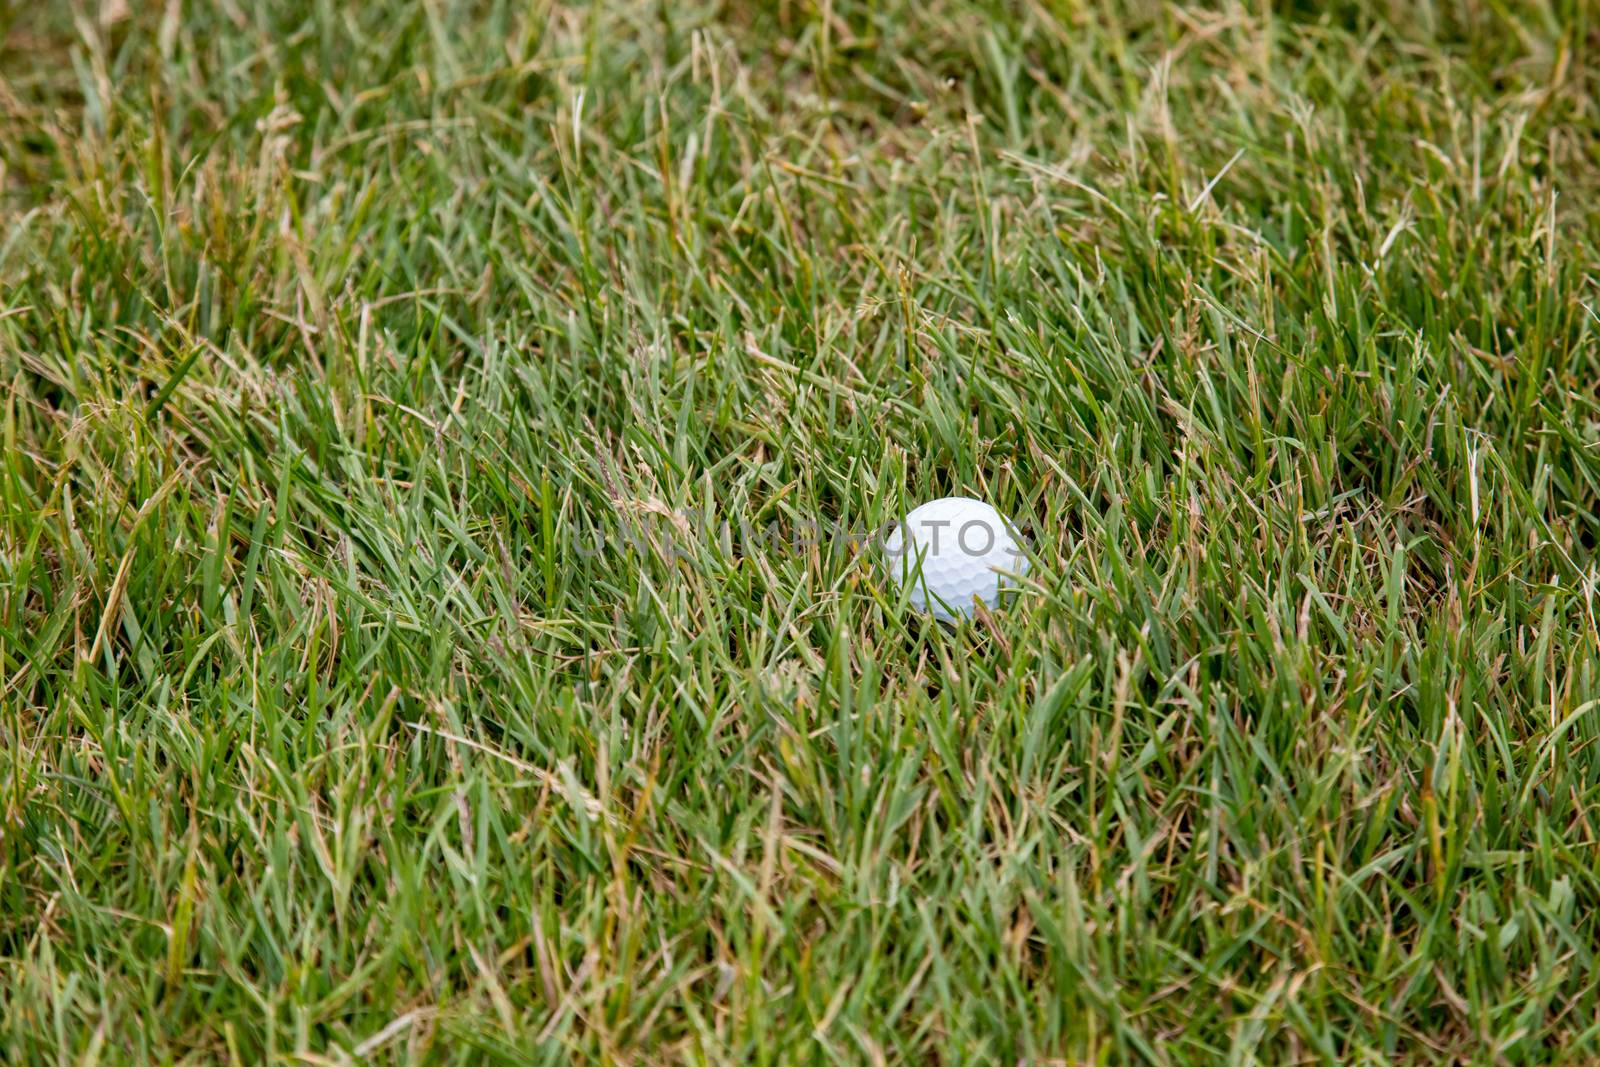 A white golf ball lies in rough, taller grass off the fairway on a golf course.